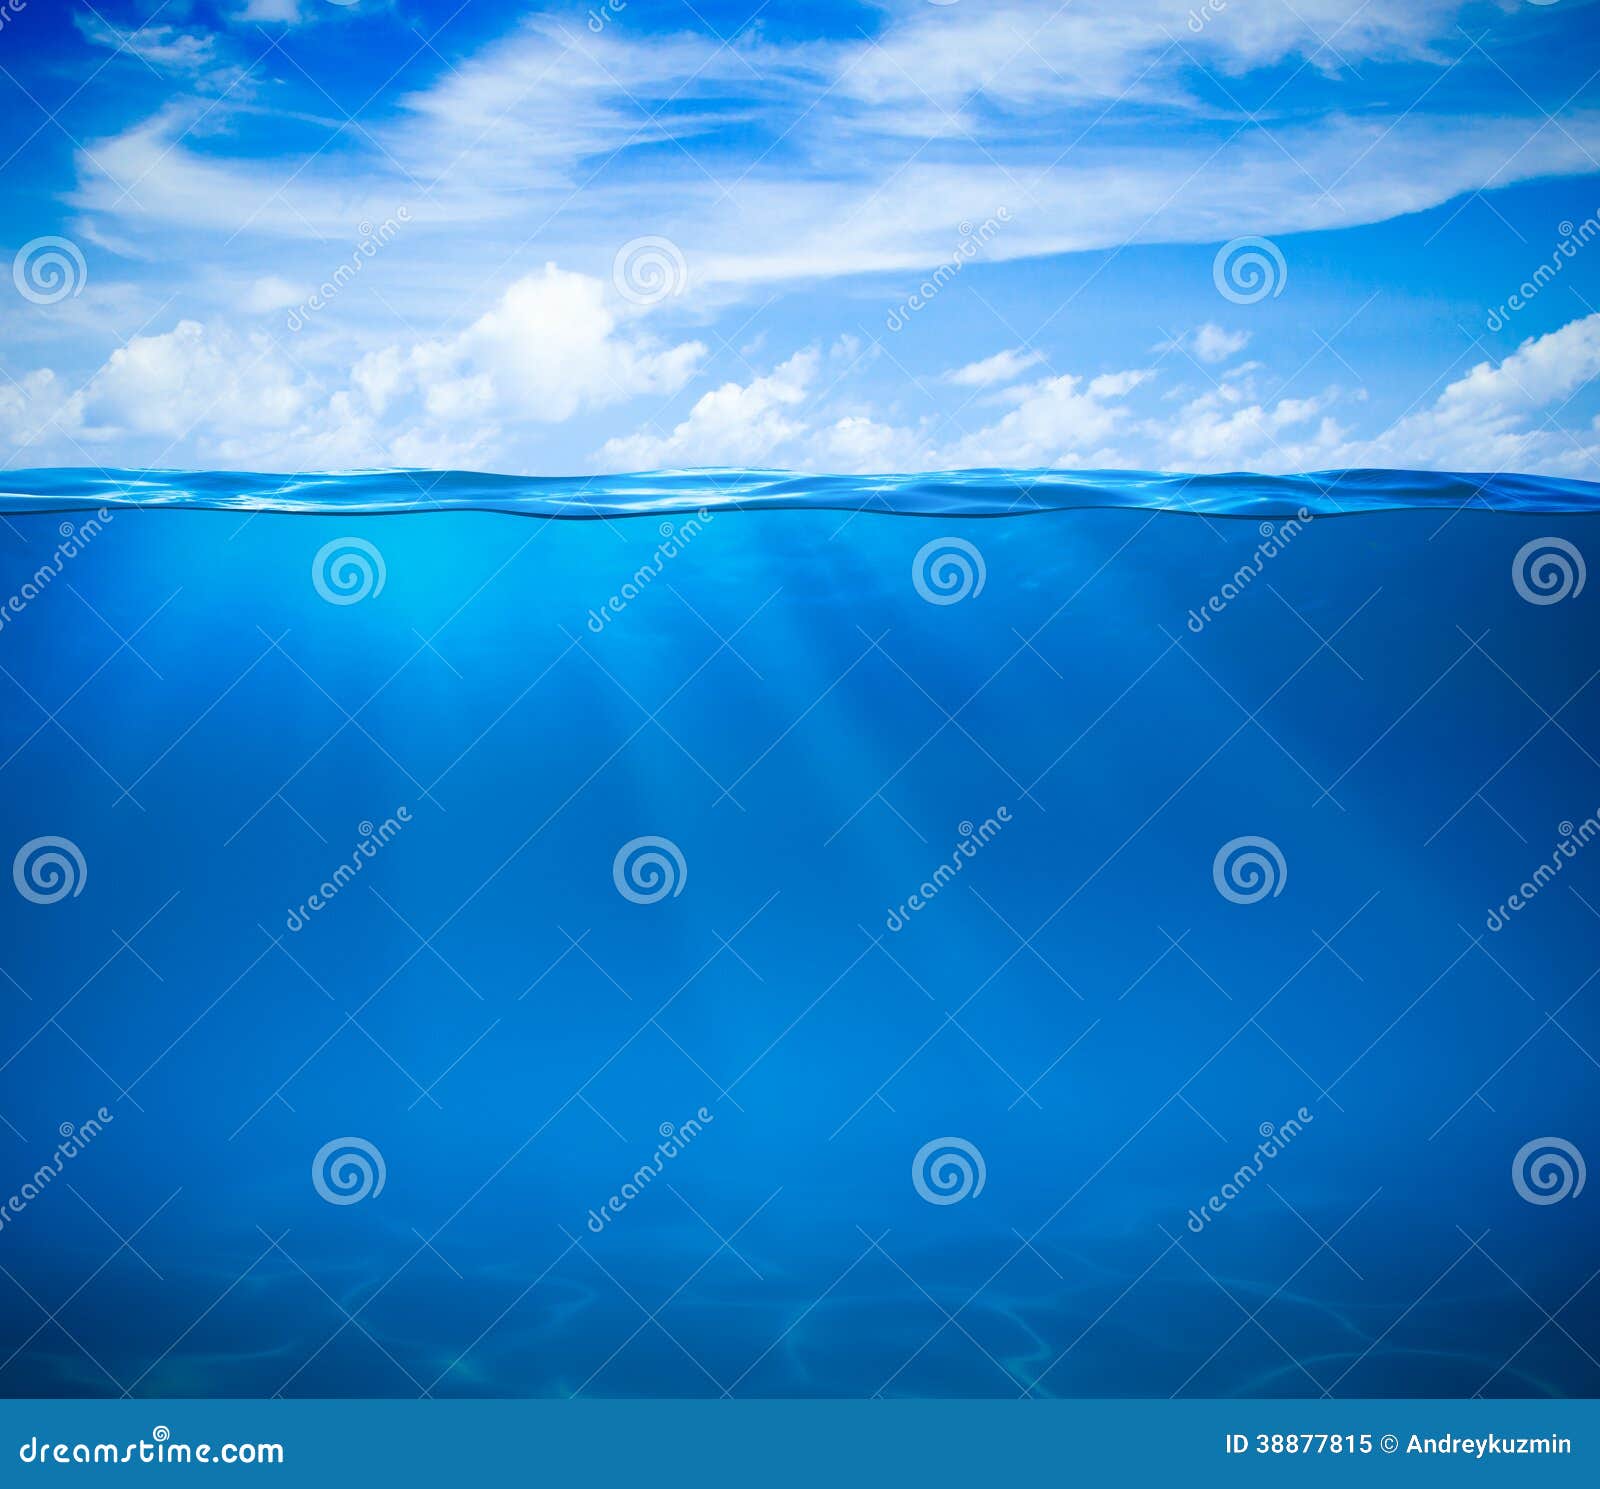 sea or ocean water surface and underwater